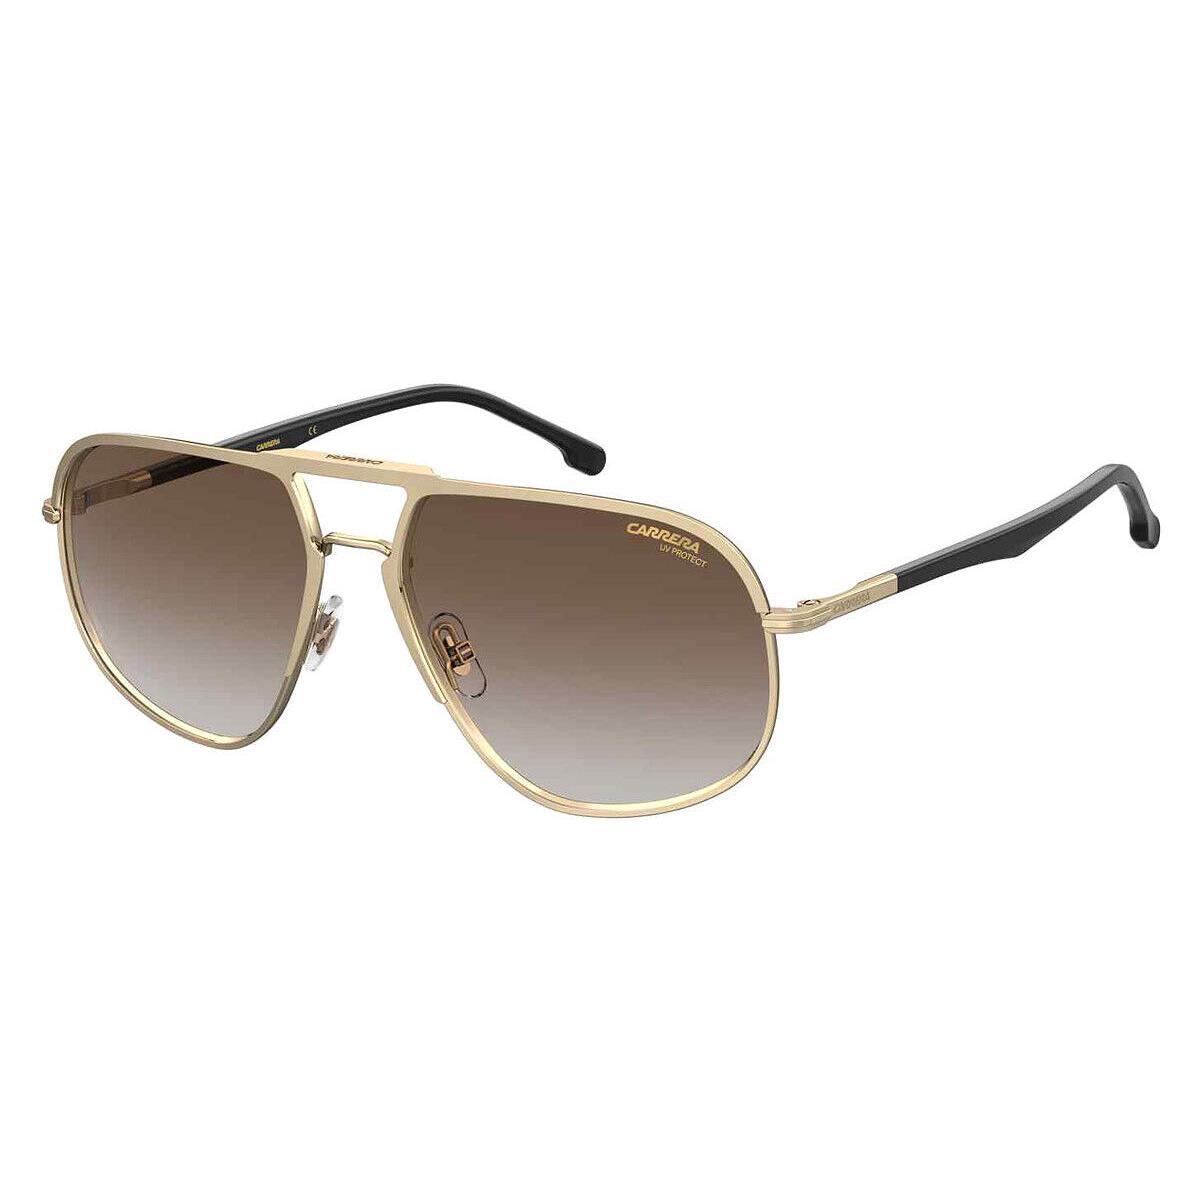 Carrera Car Sunglasses Men Gold / Brown Shaded AR 60mm